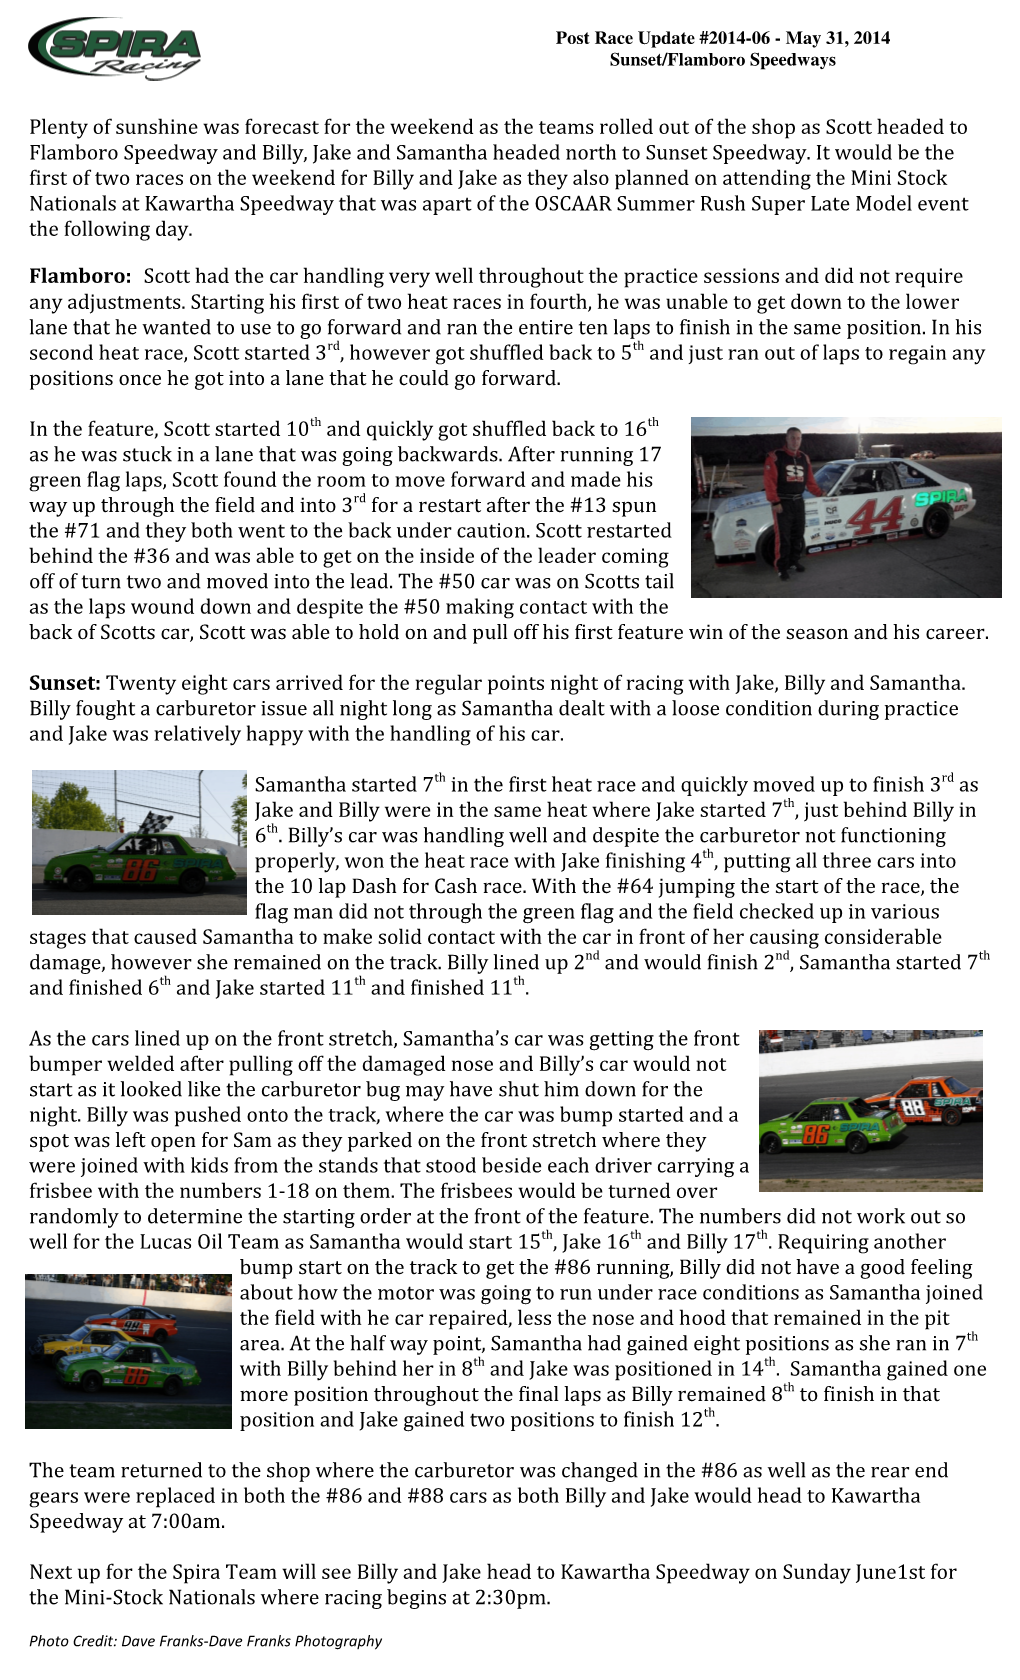 K:\Ken\Spira Racing\Mini-Stocks\Updates\Post Race\2014 Post